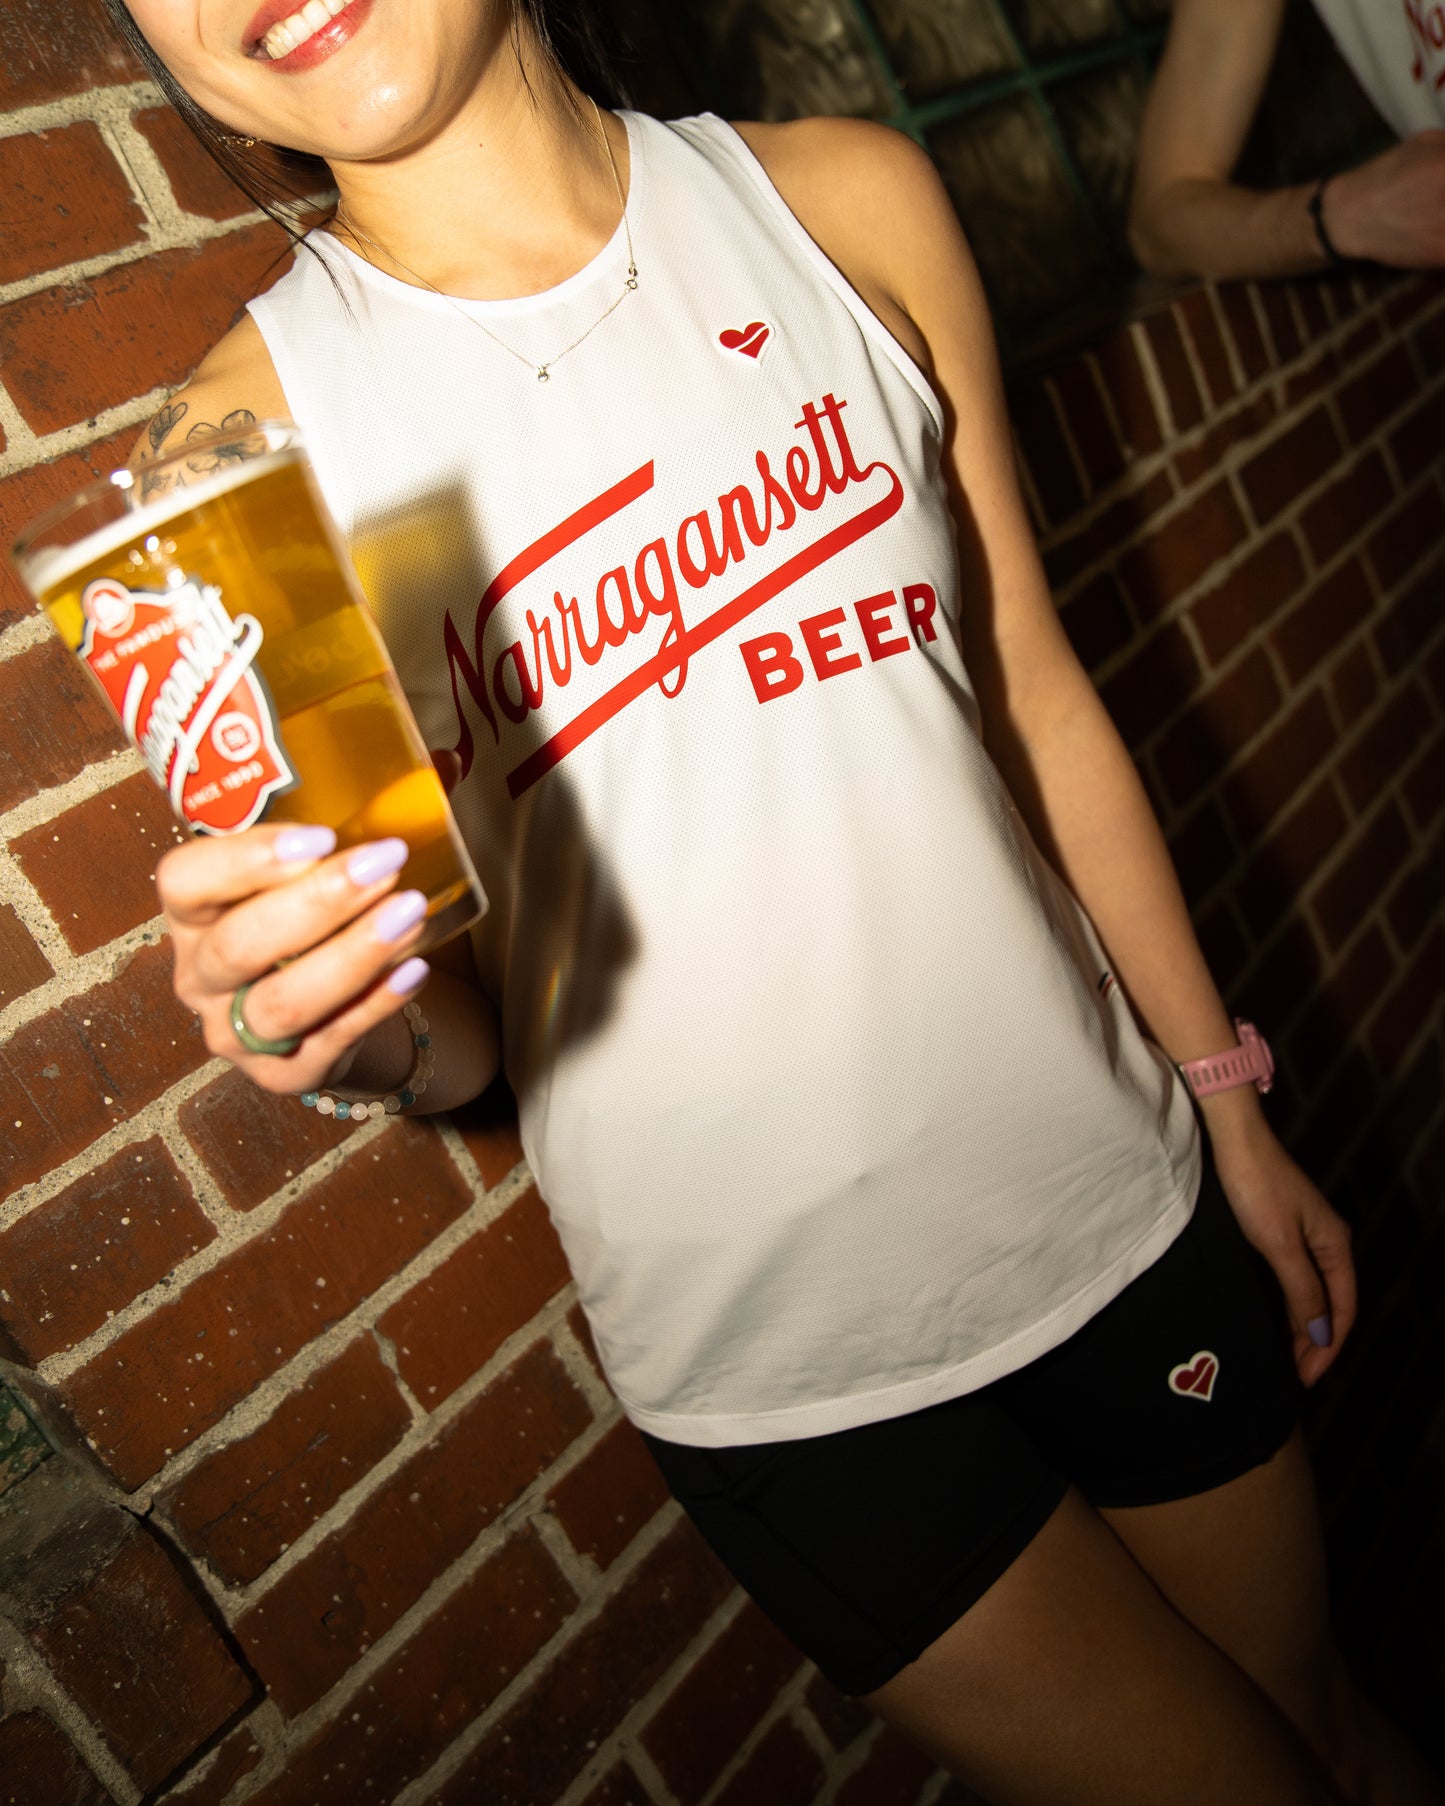 Women's Narragansett Beer x Heartbreak Hill Running Co. Singlet